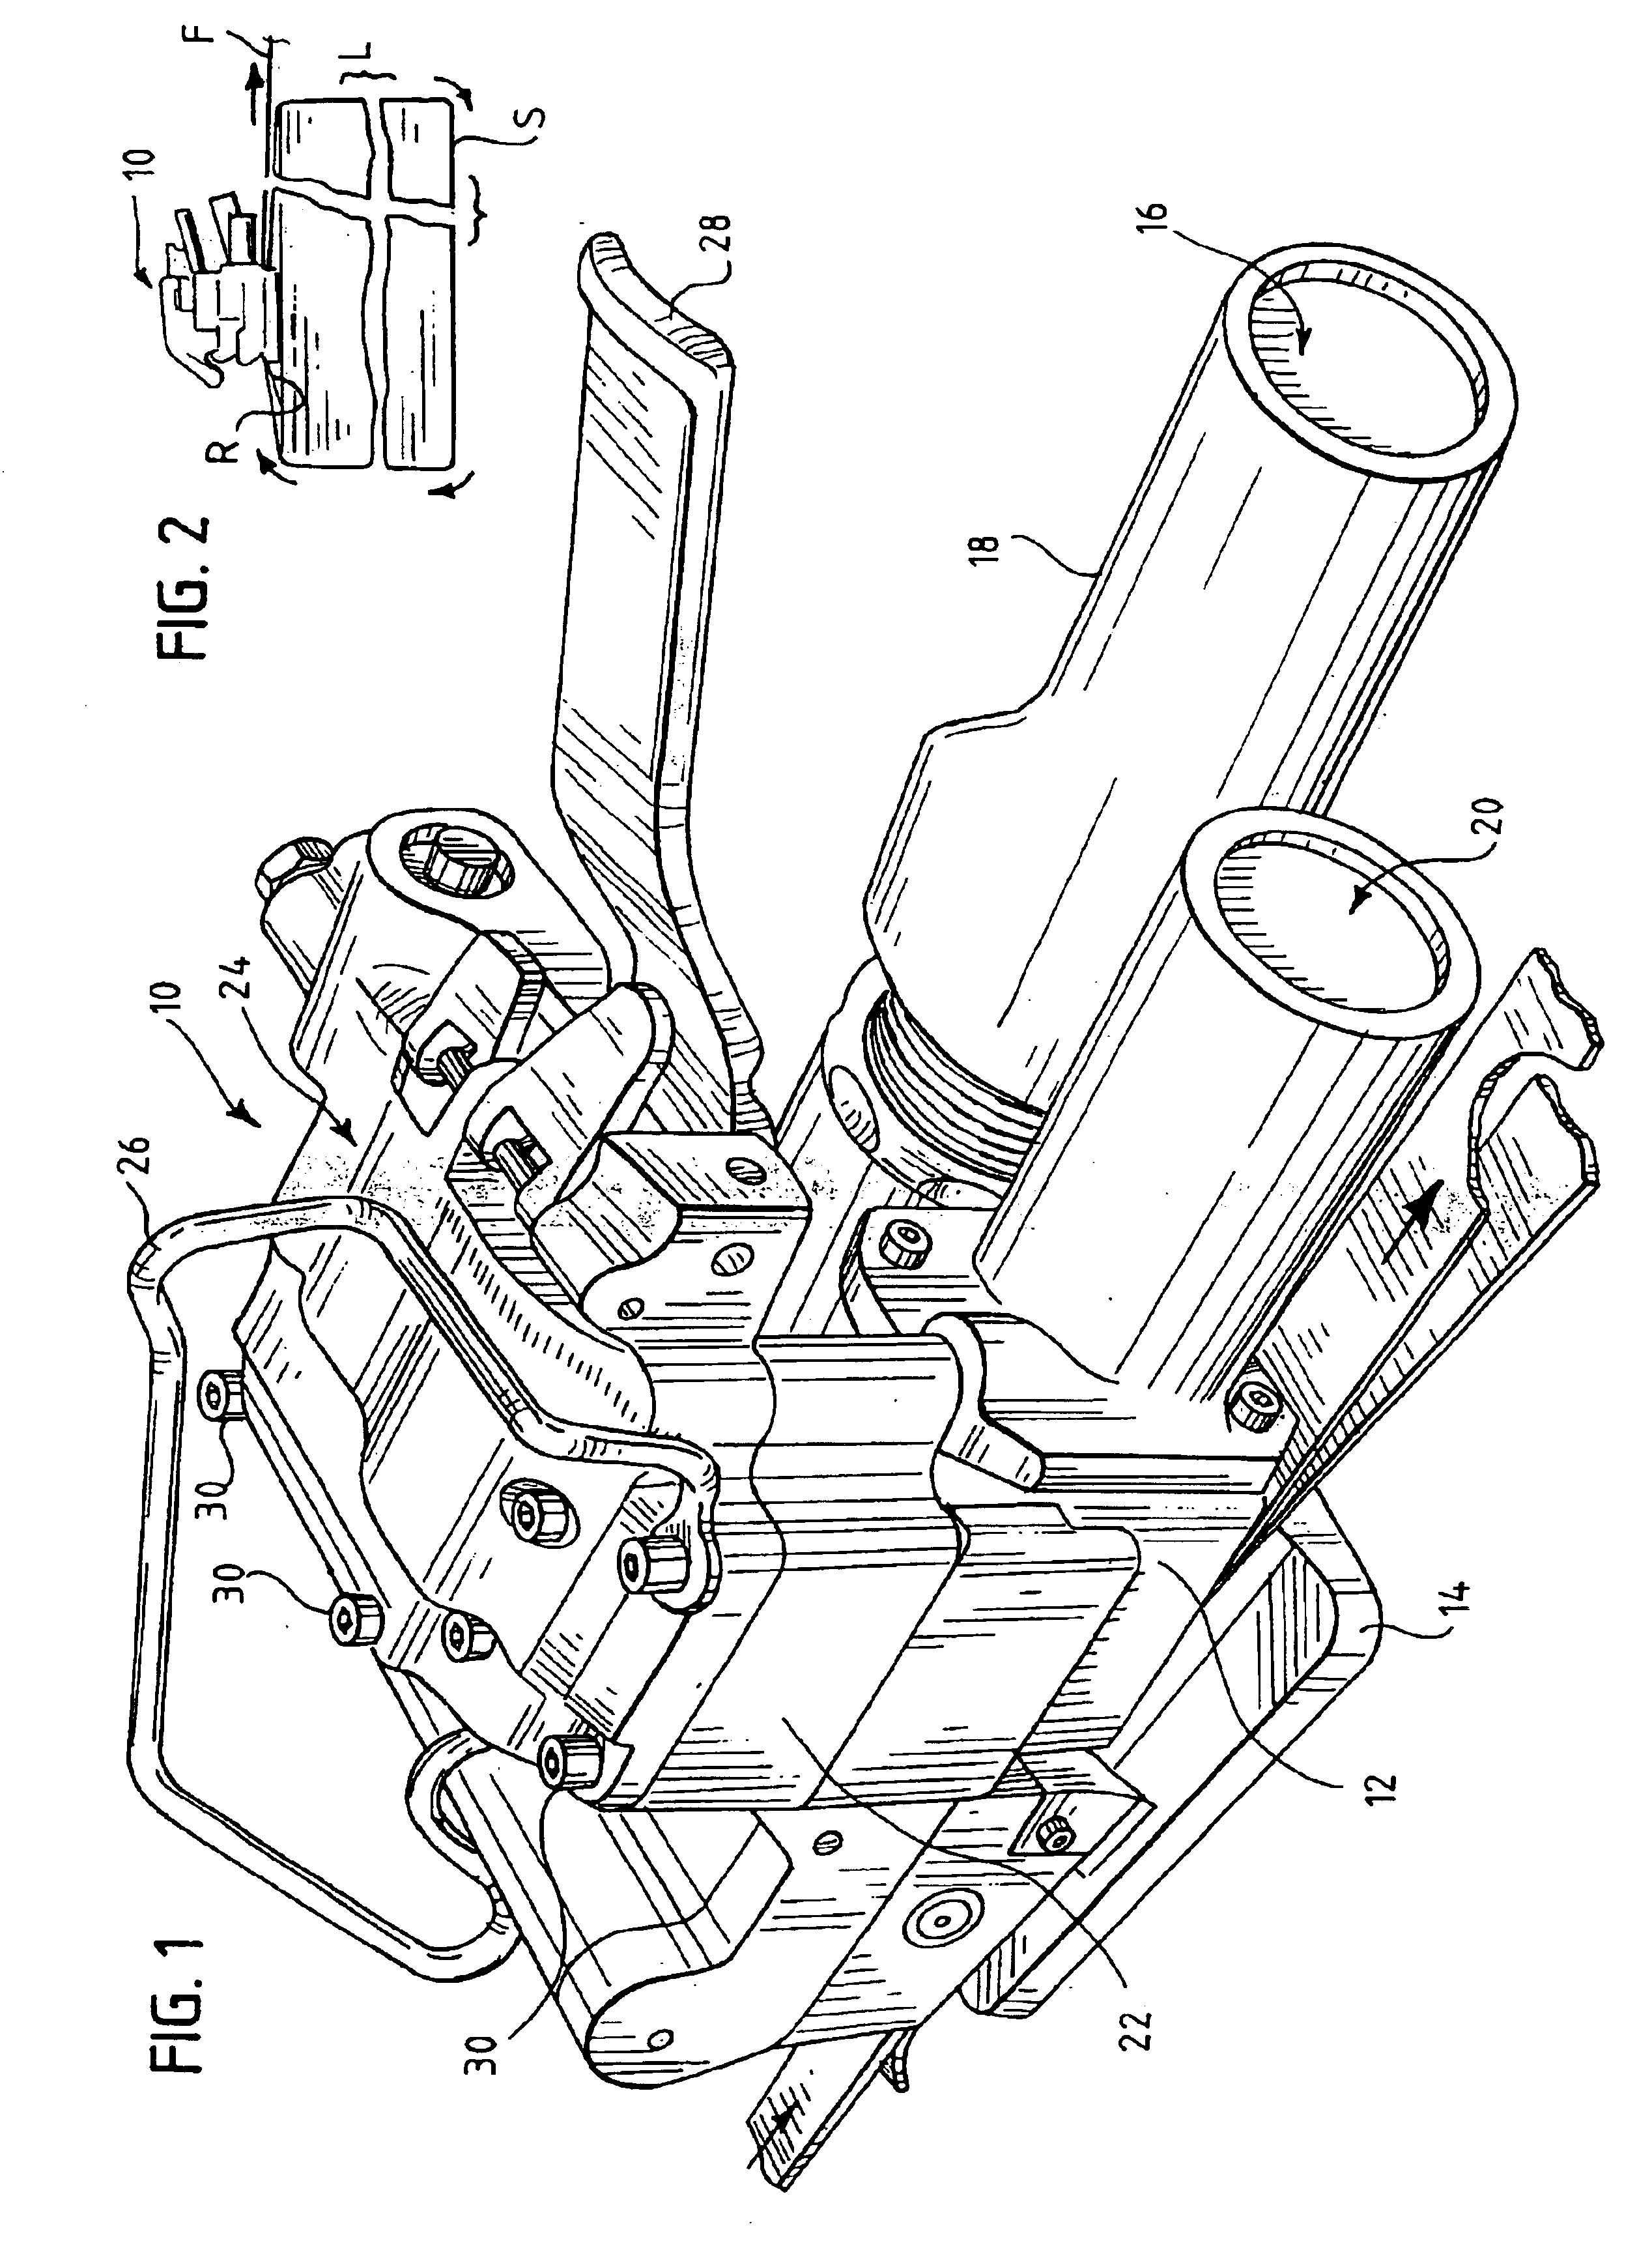 Dual motor strapper